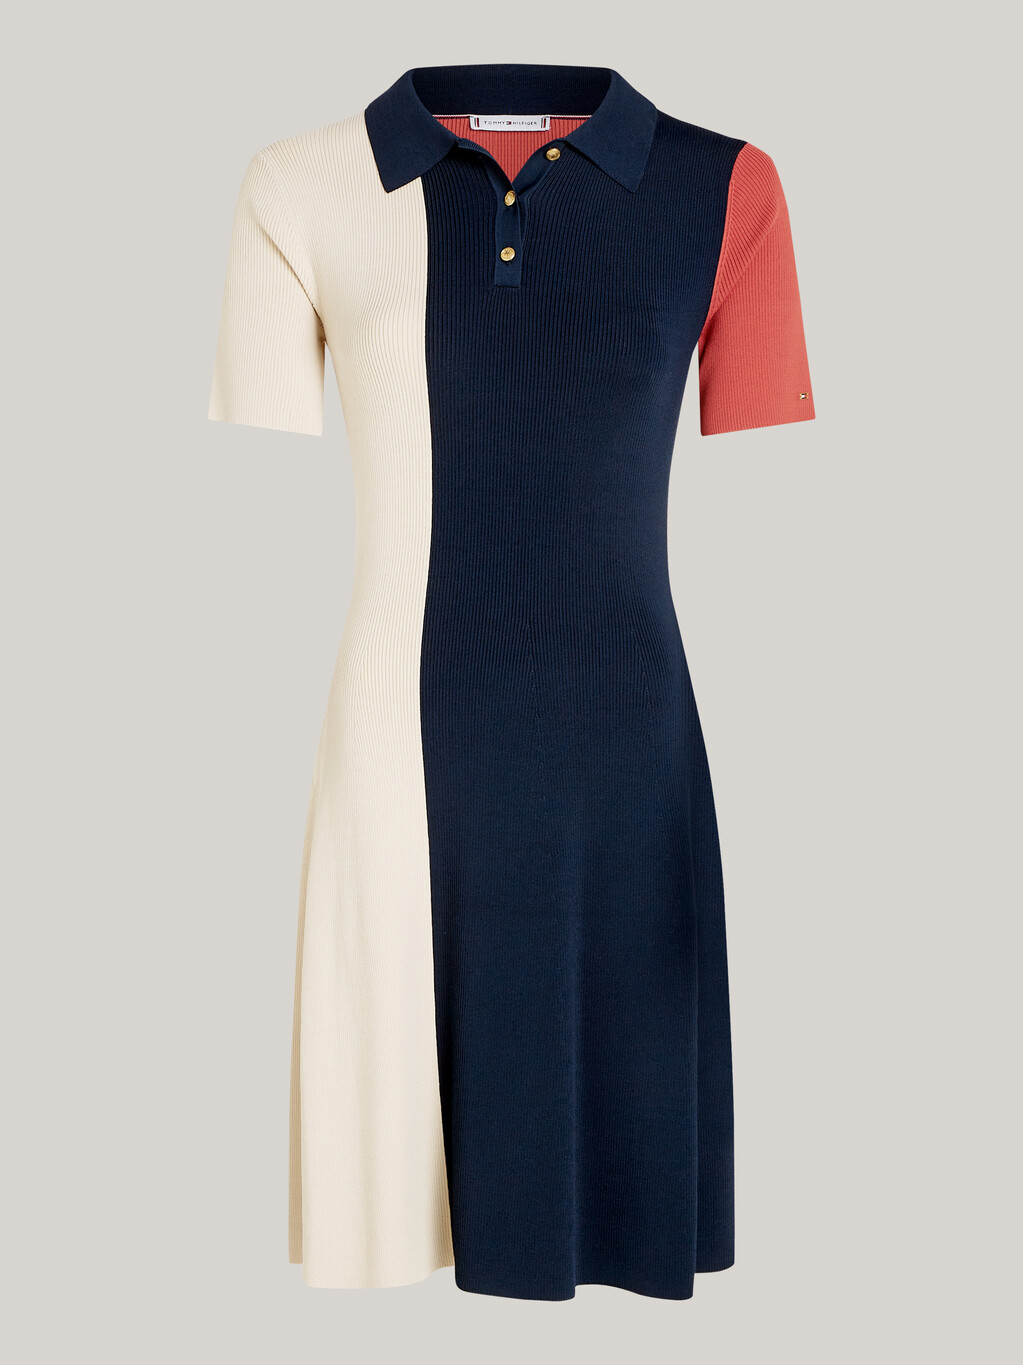 Colour-Blocked Knit Slim Fit Polo Dress, Global Stp/ Color Blocked, hi-res